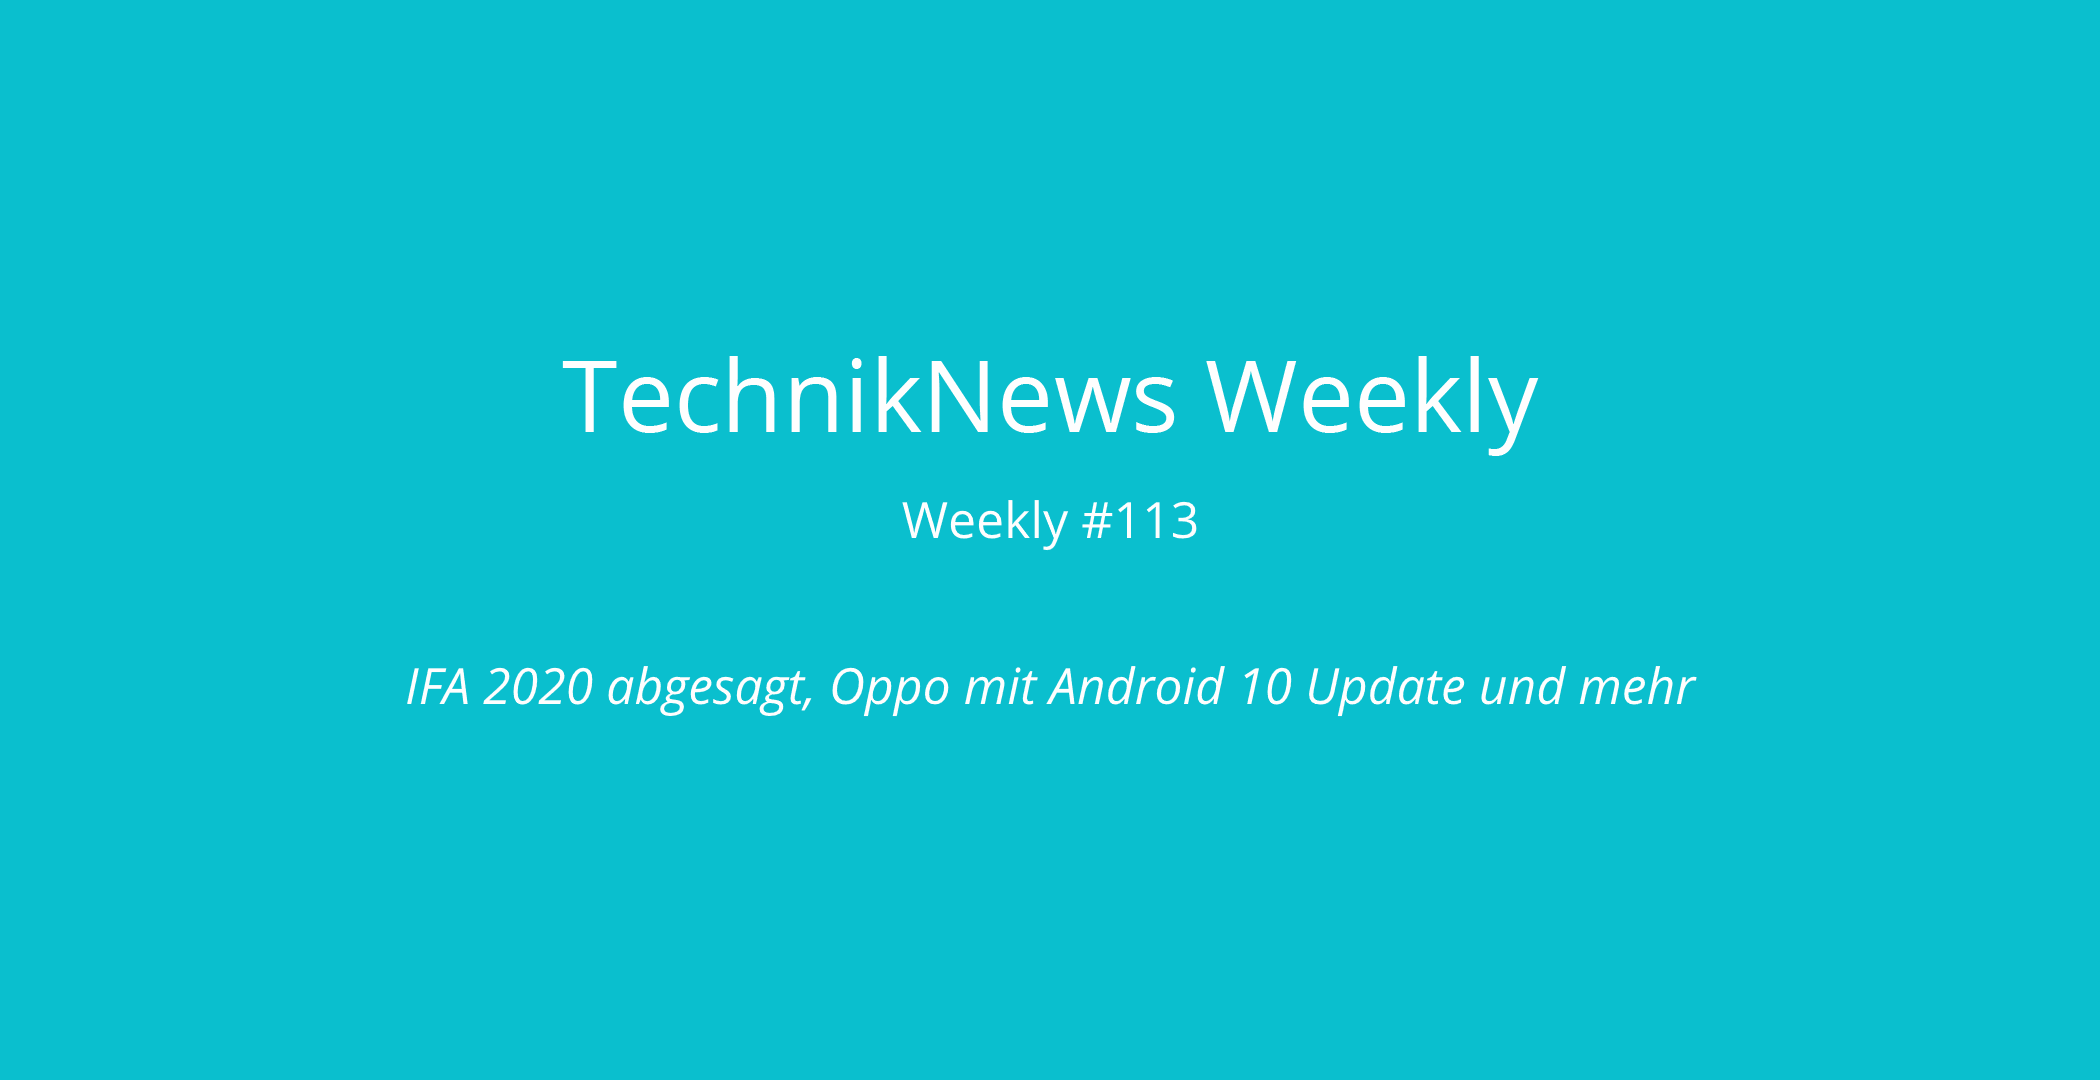 TechnikNews Weekly 113